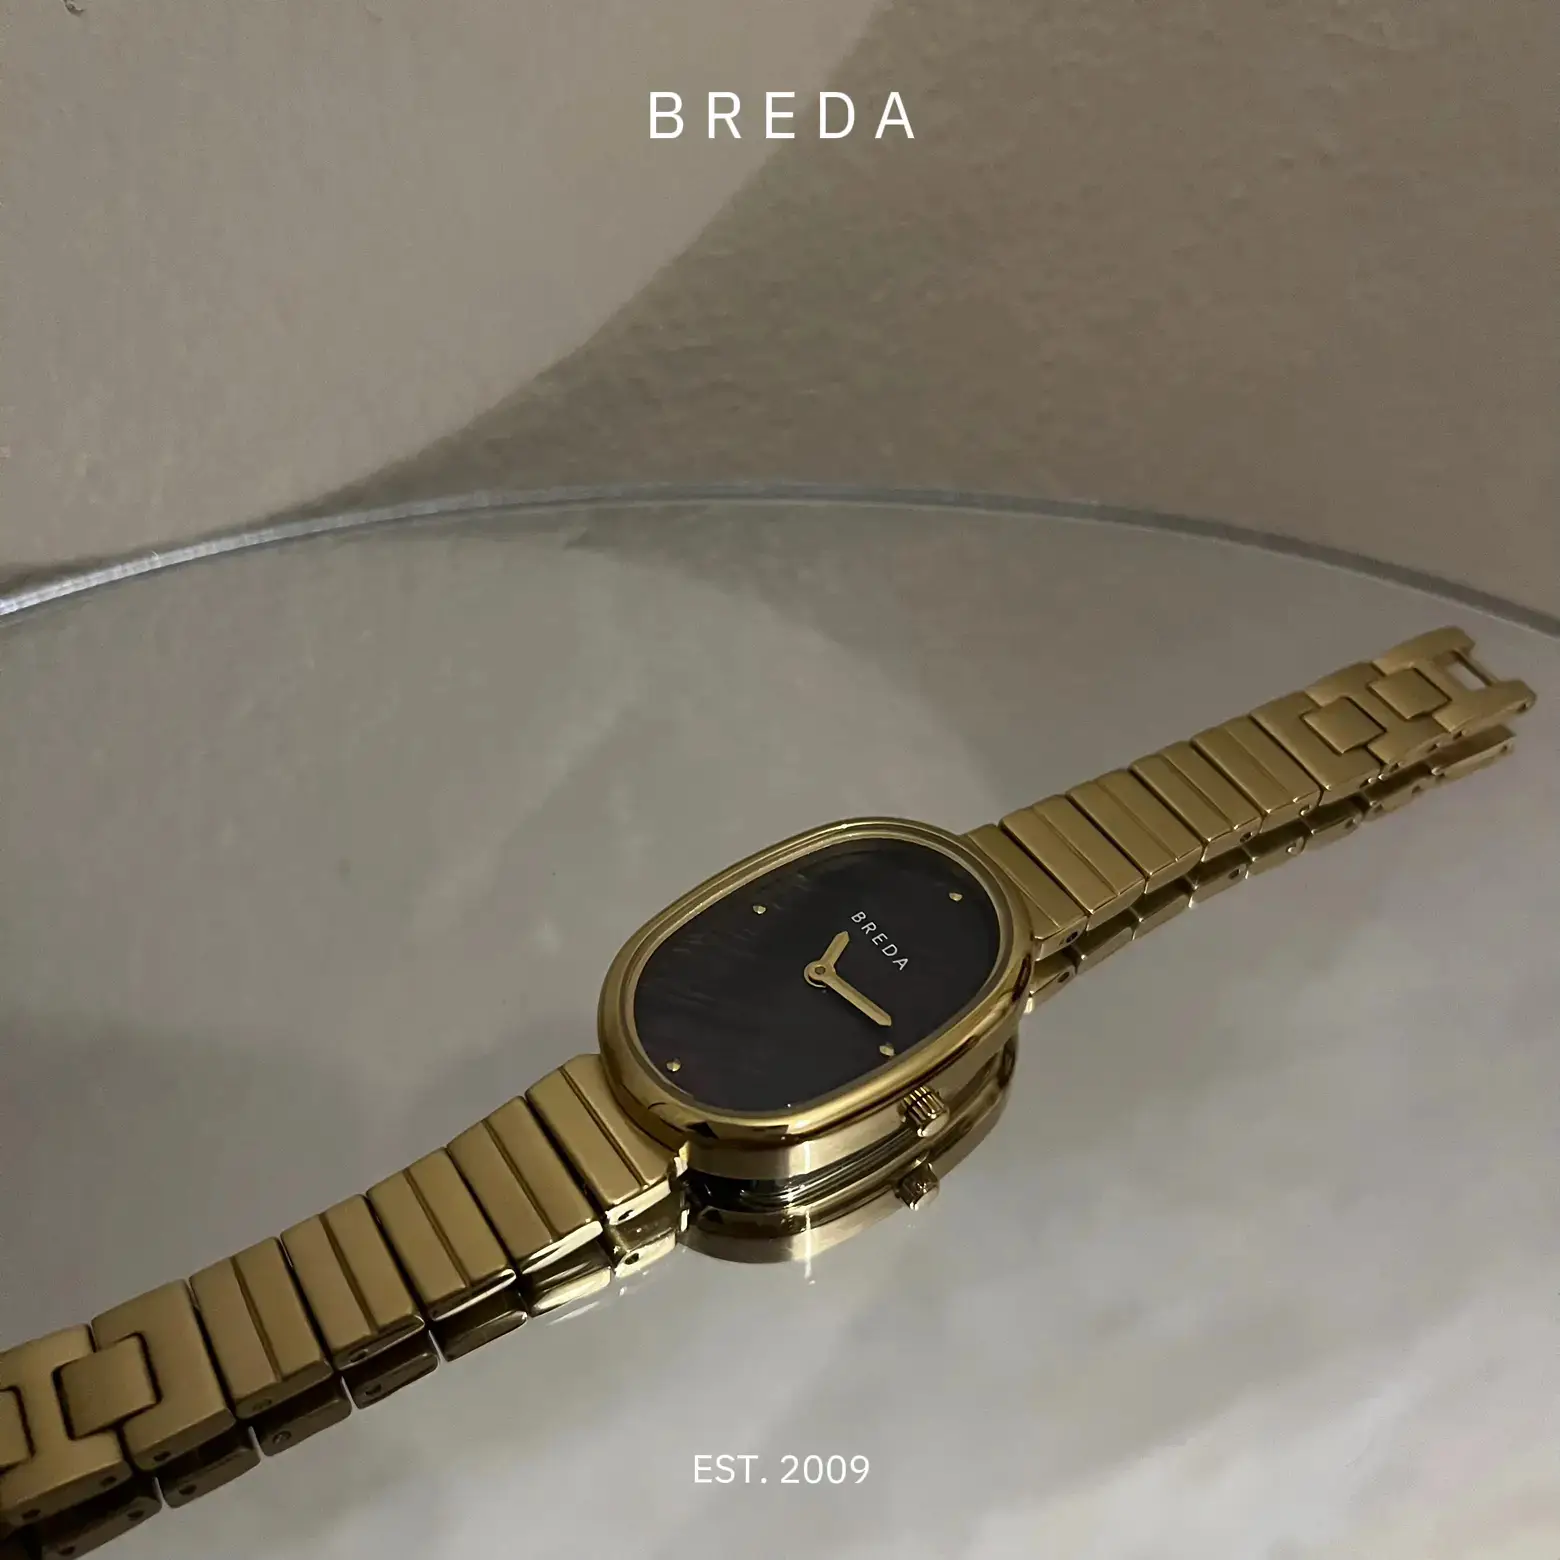 B R E D Aブランド腕時計 | bbytoey が投稿したフォトブック | Lemon8